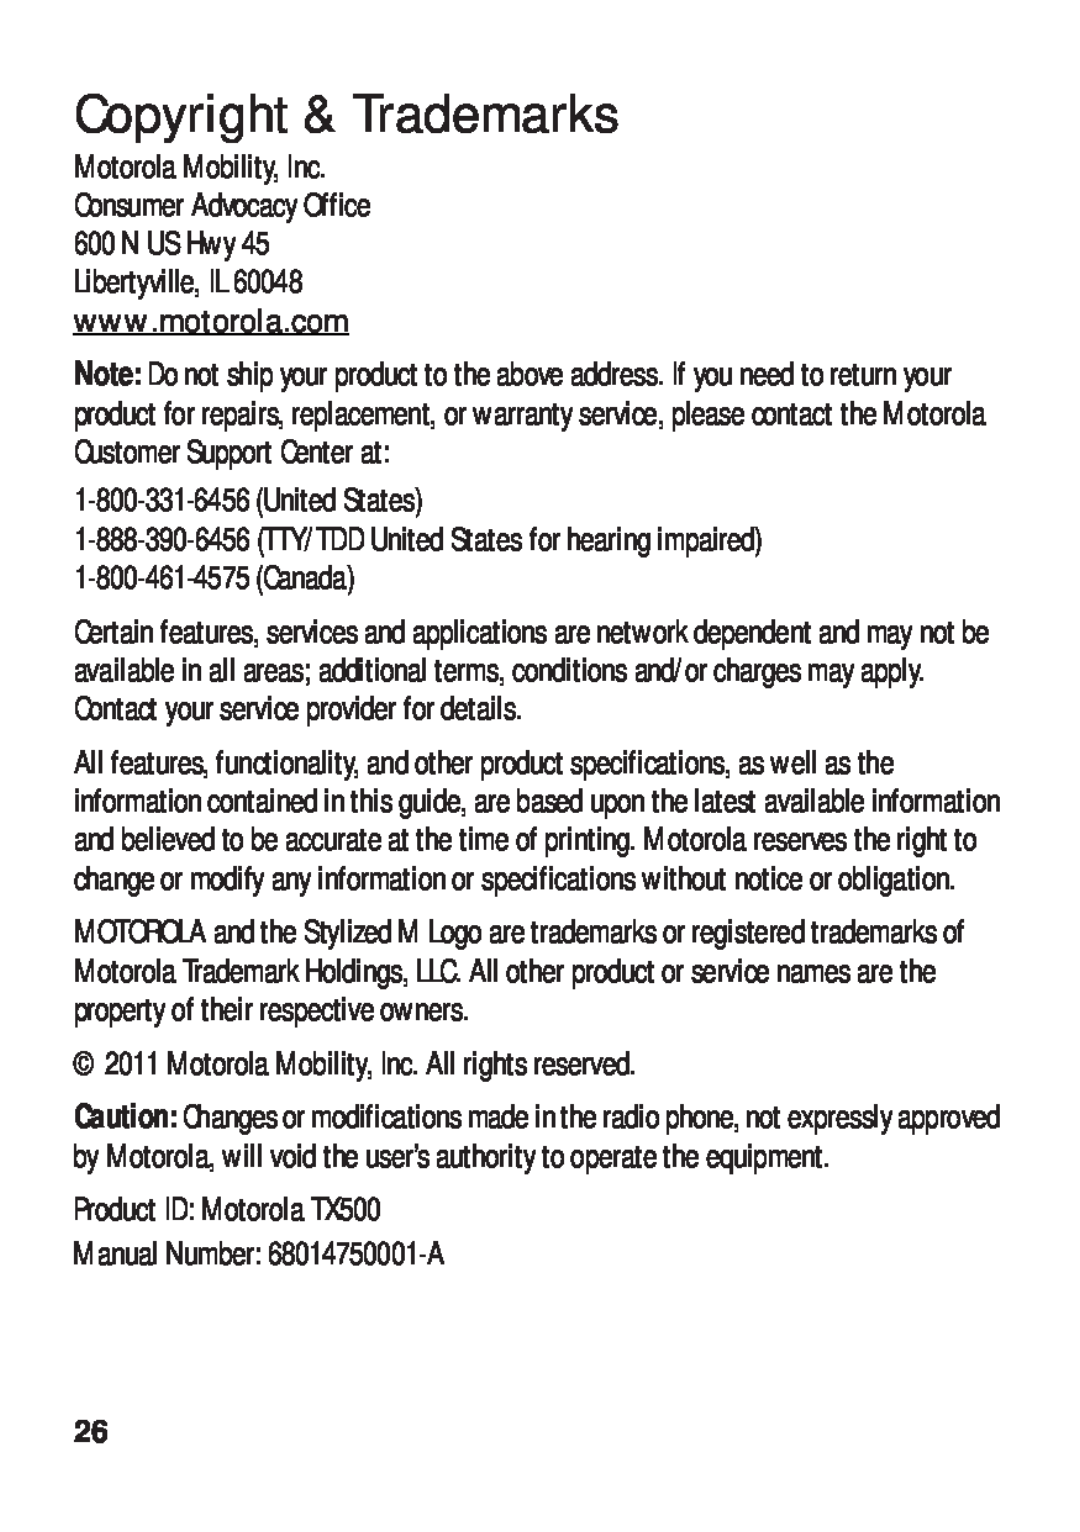 Motorola manual Copyright & Trademarks, Motorola Mobility, Inc. All rights reserved, Product ID Motorola TX500 